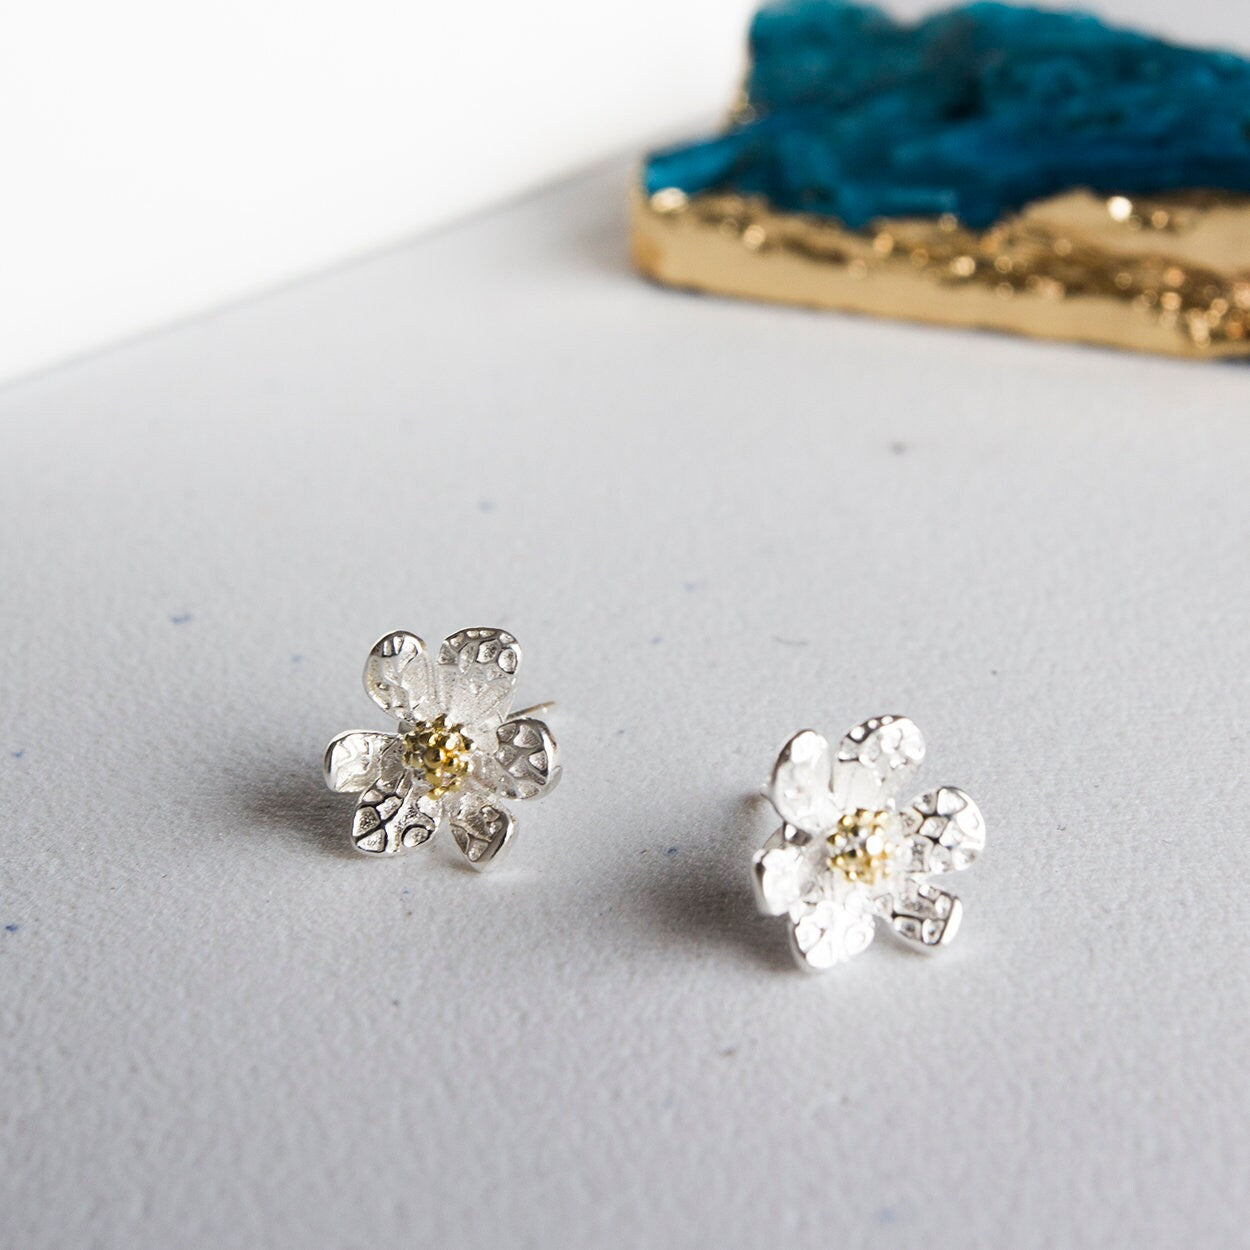 Anemones Flower Earrings Sterling Silver In A Gift Box